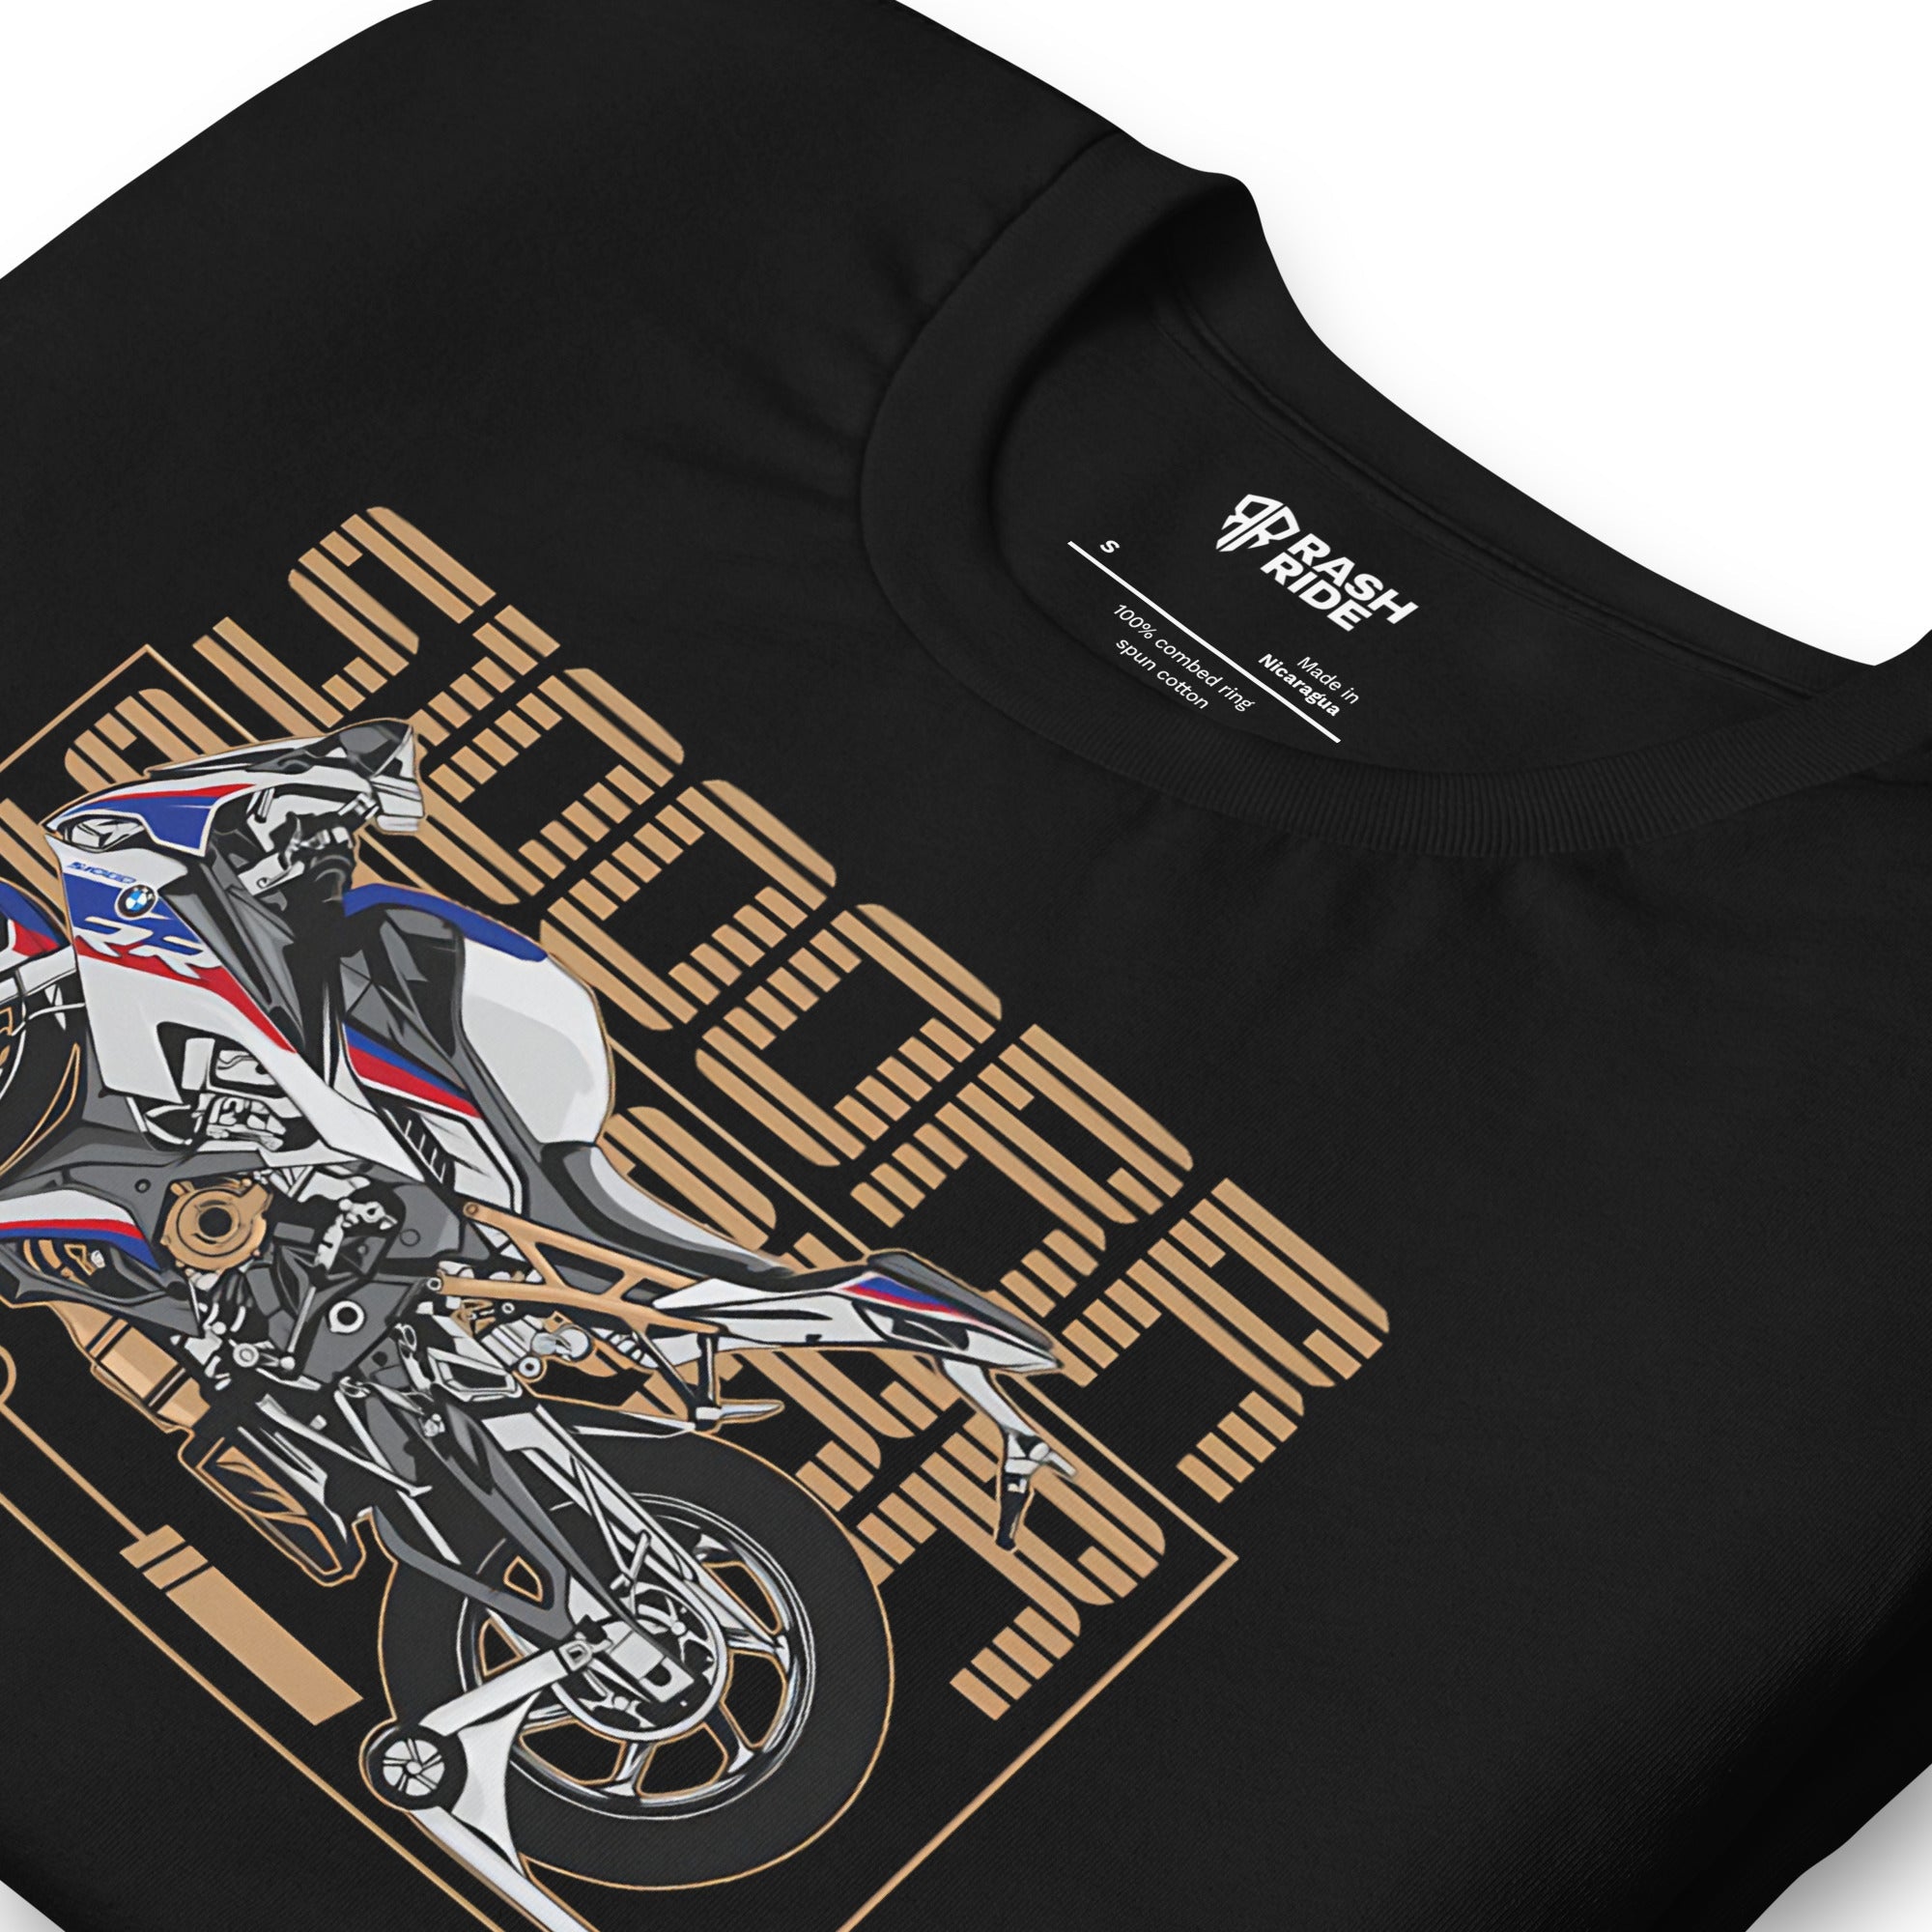 KTM Racing Tshirt - Superbikes Rossi T shirt - Biker Mens Tee